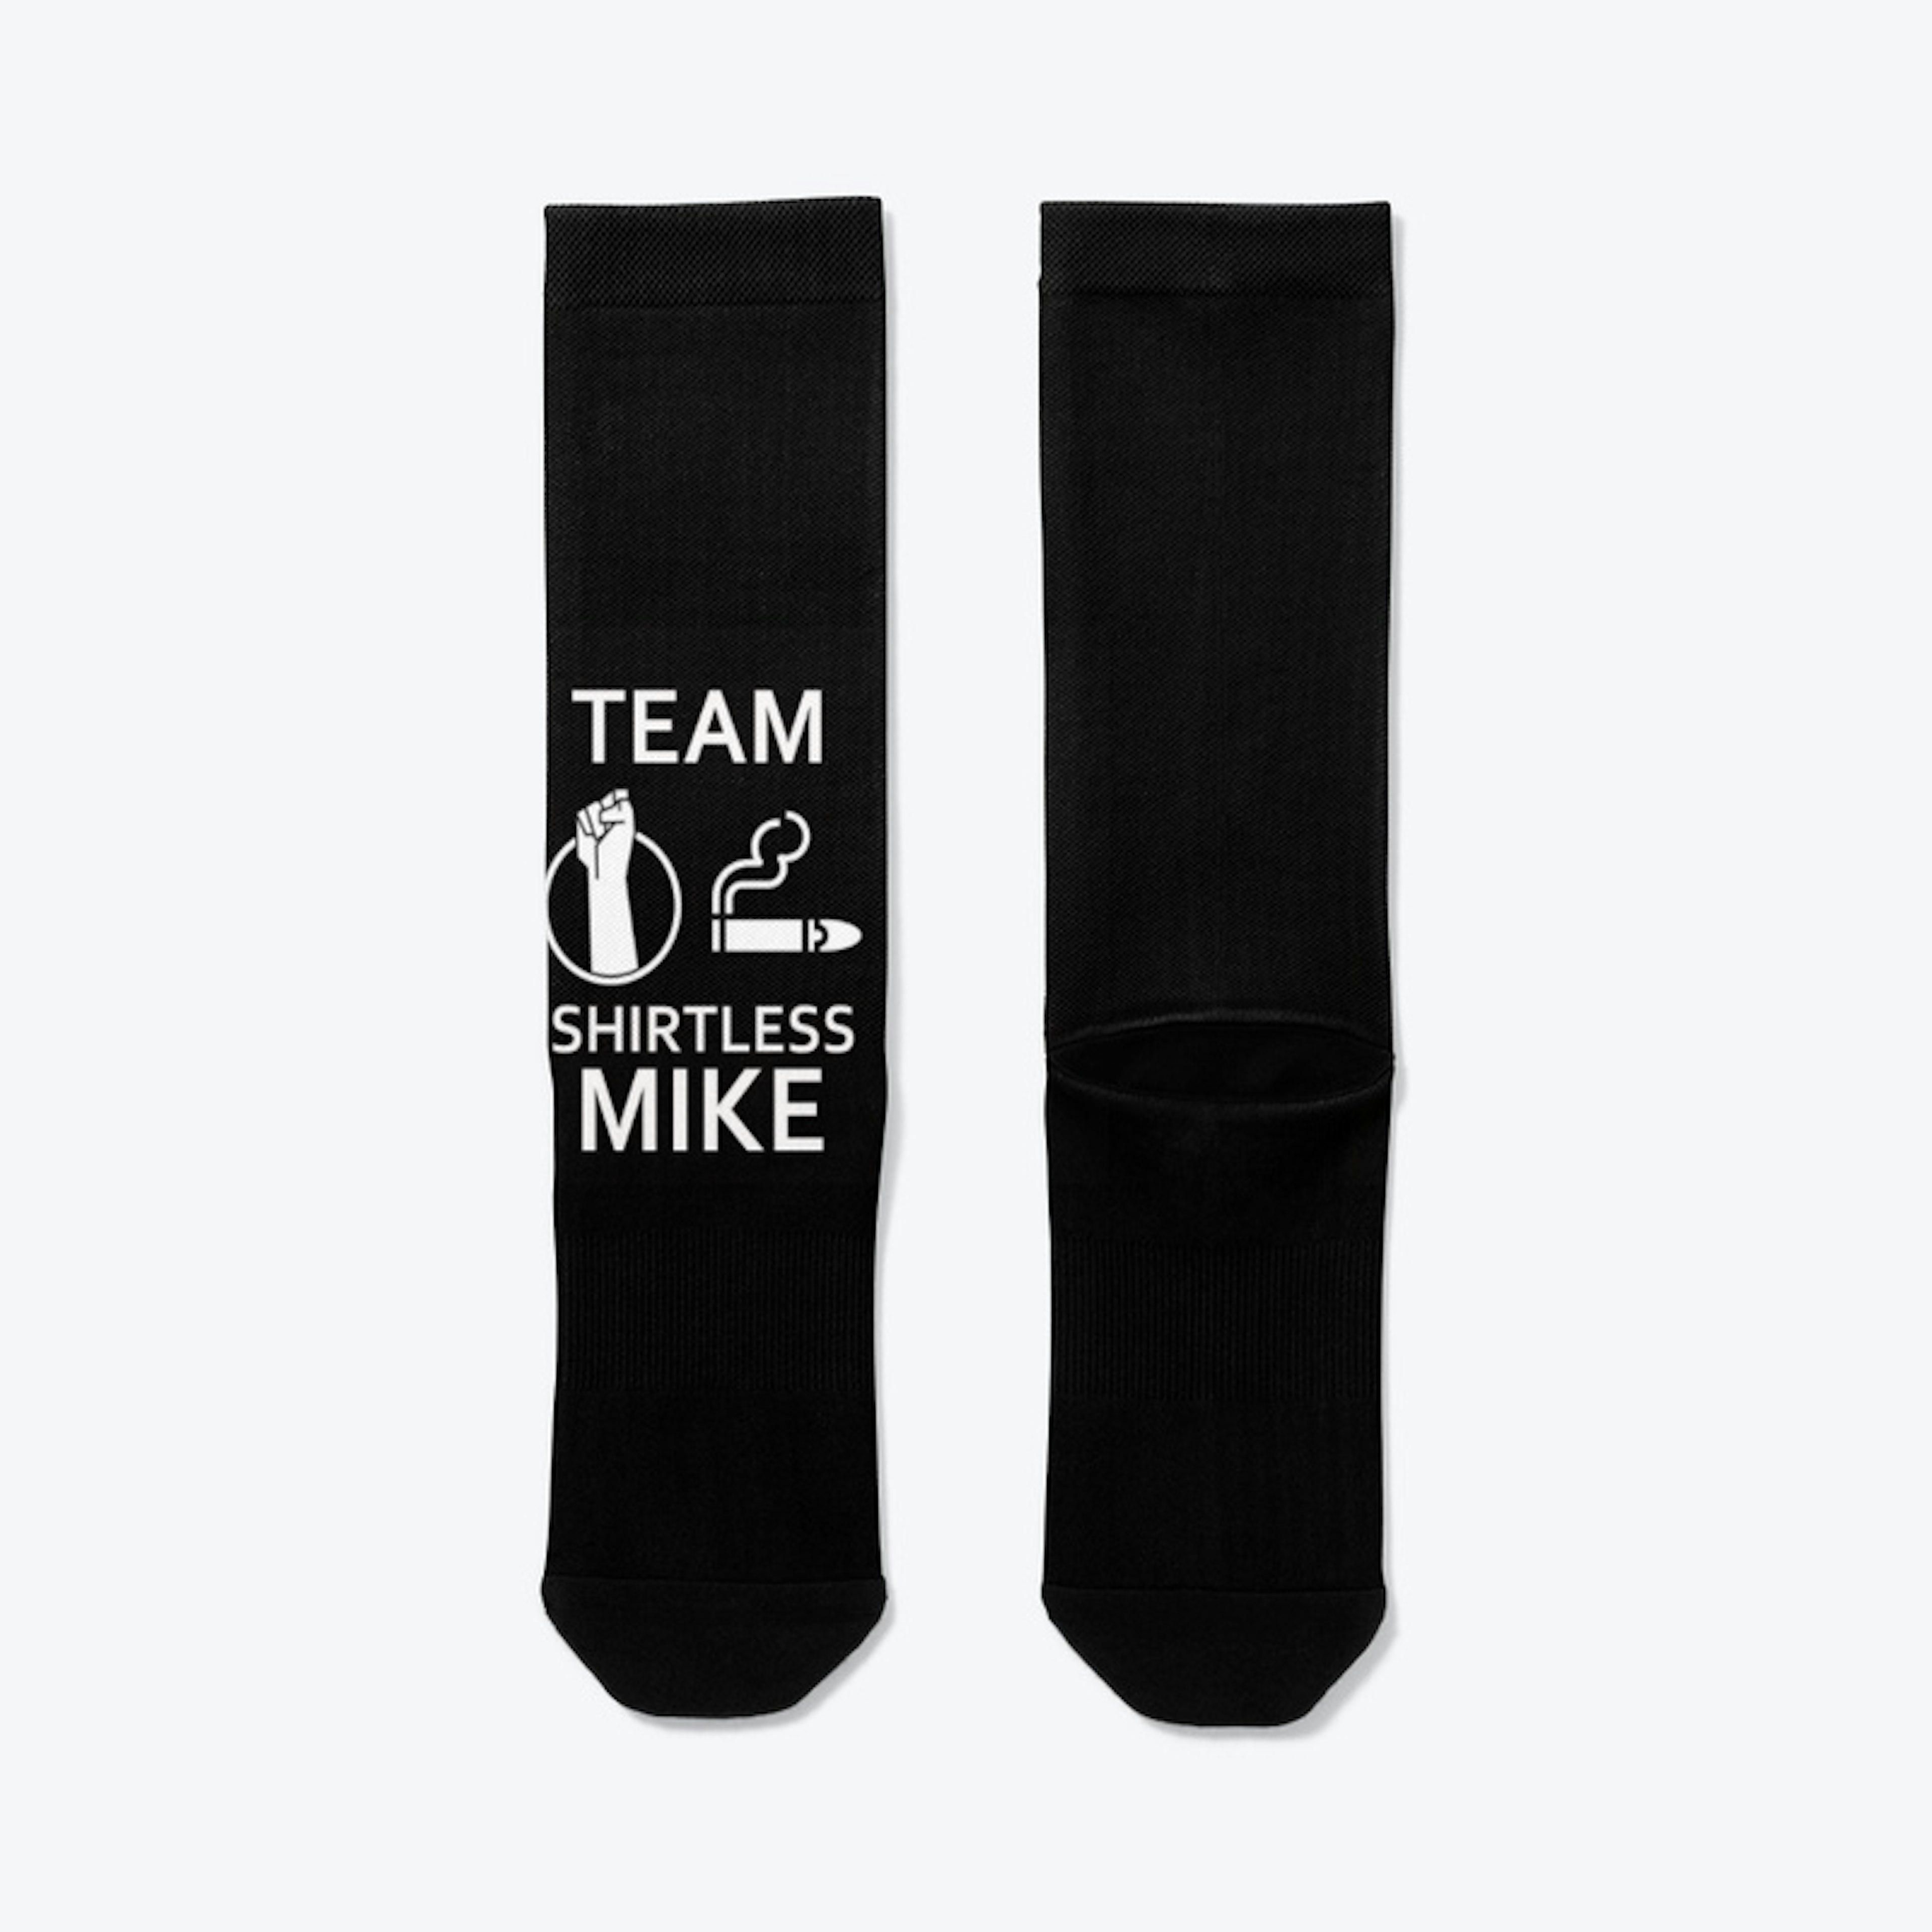 Team Shirtless Mike Socks